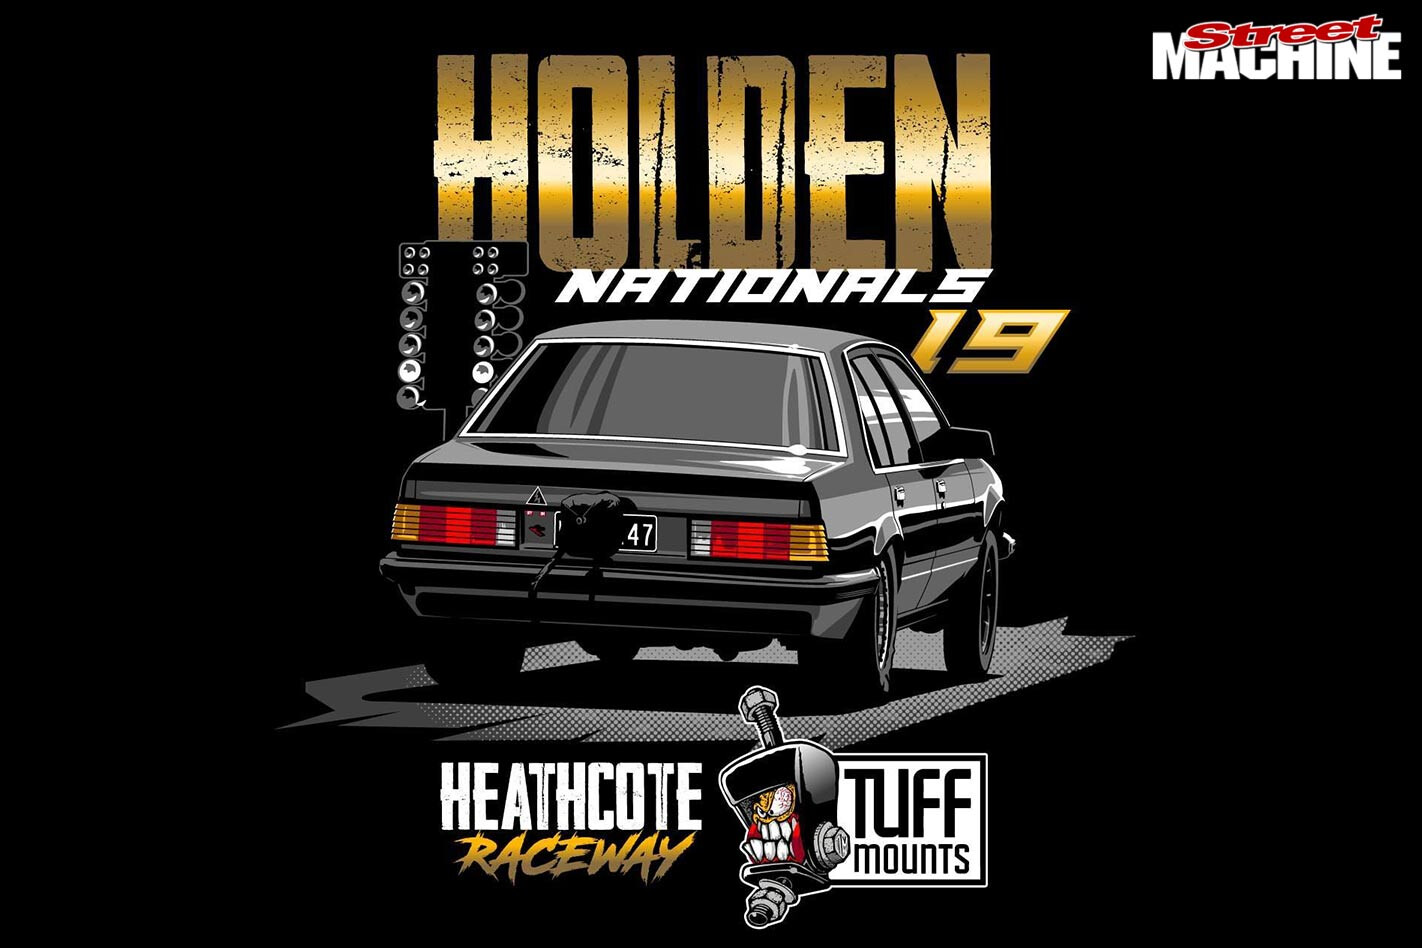 Holden Nationals